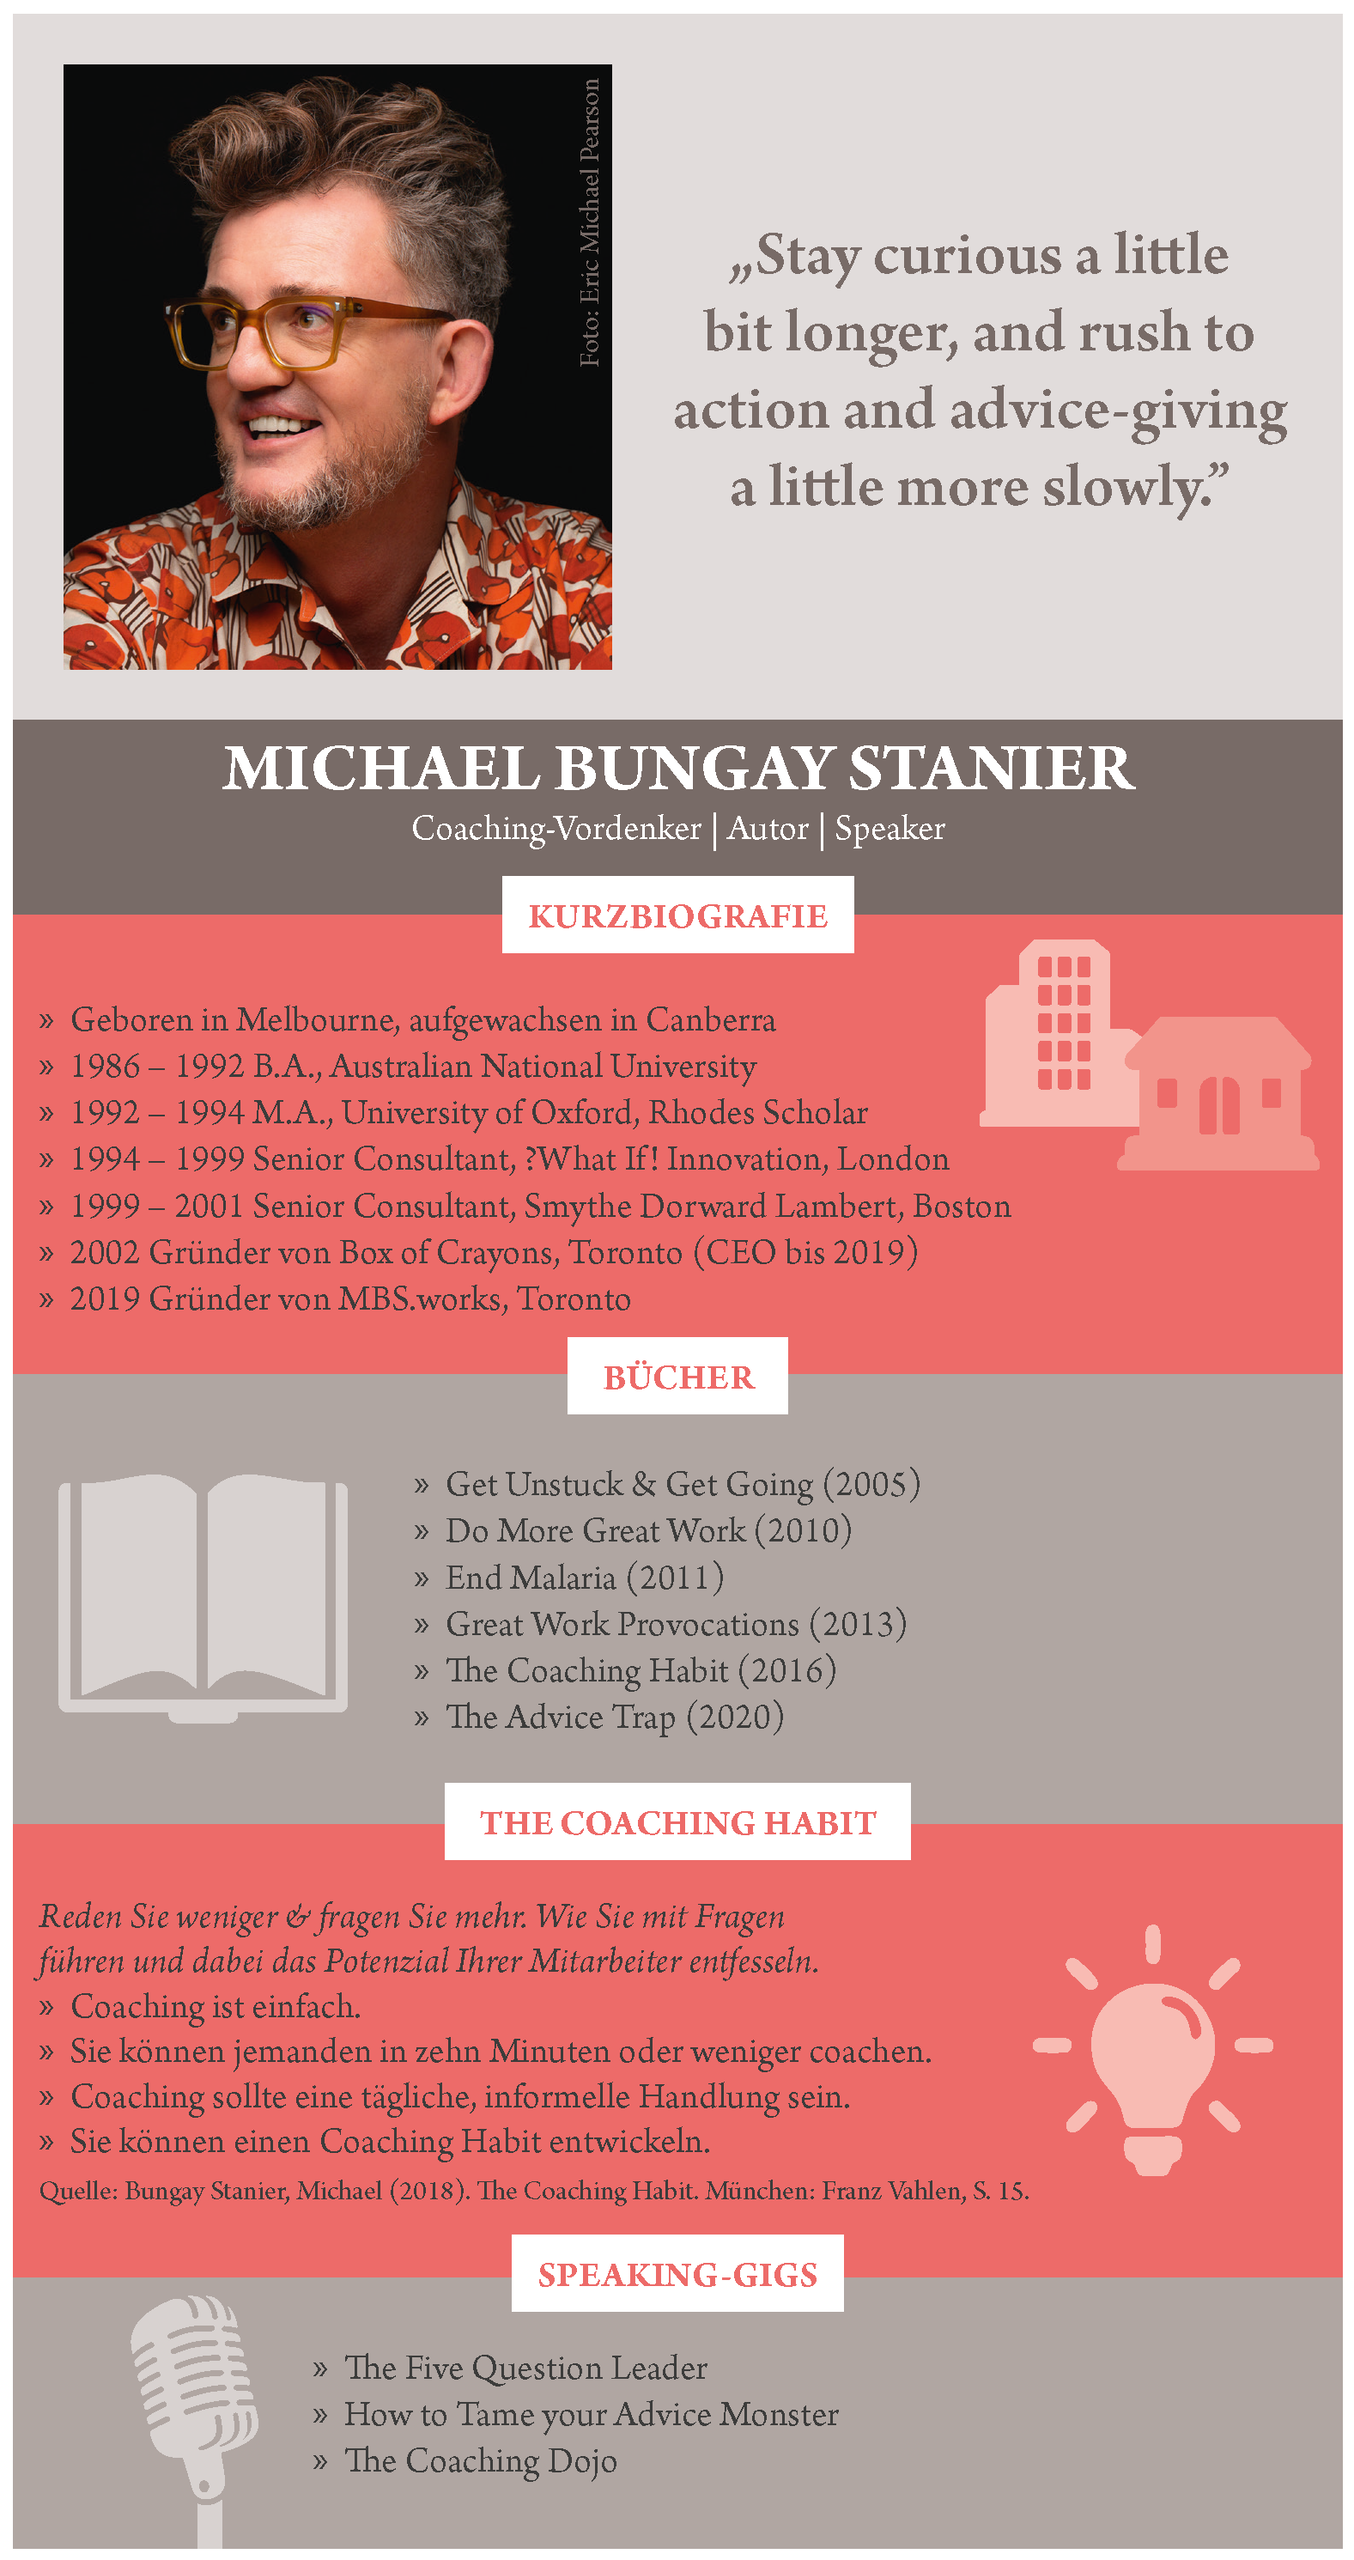 Michael Bungay Stanier